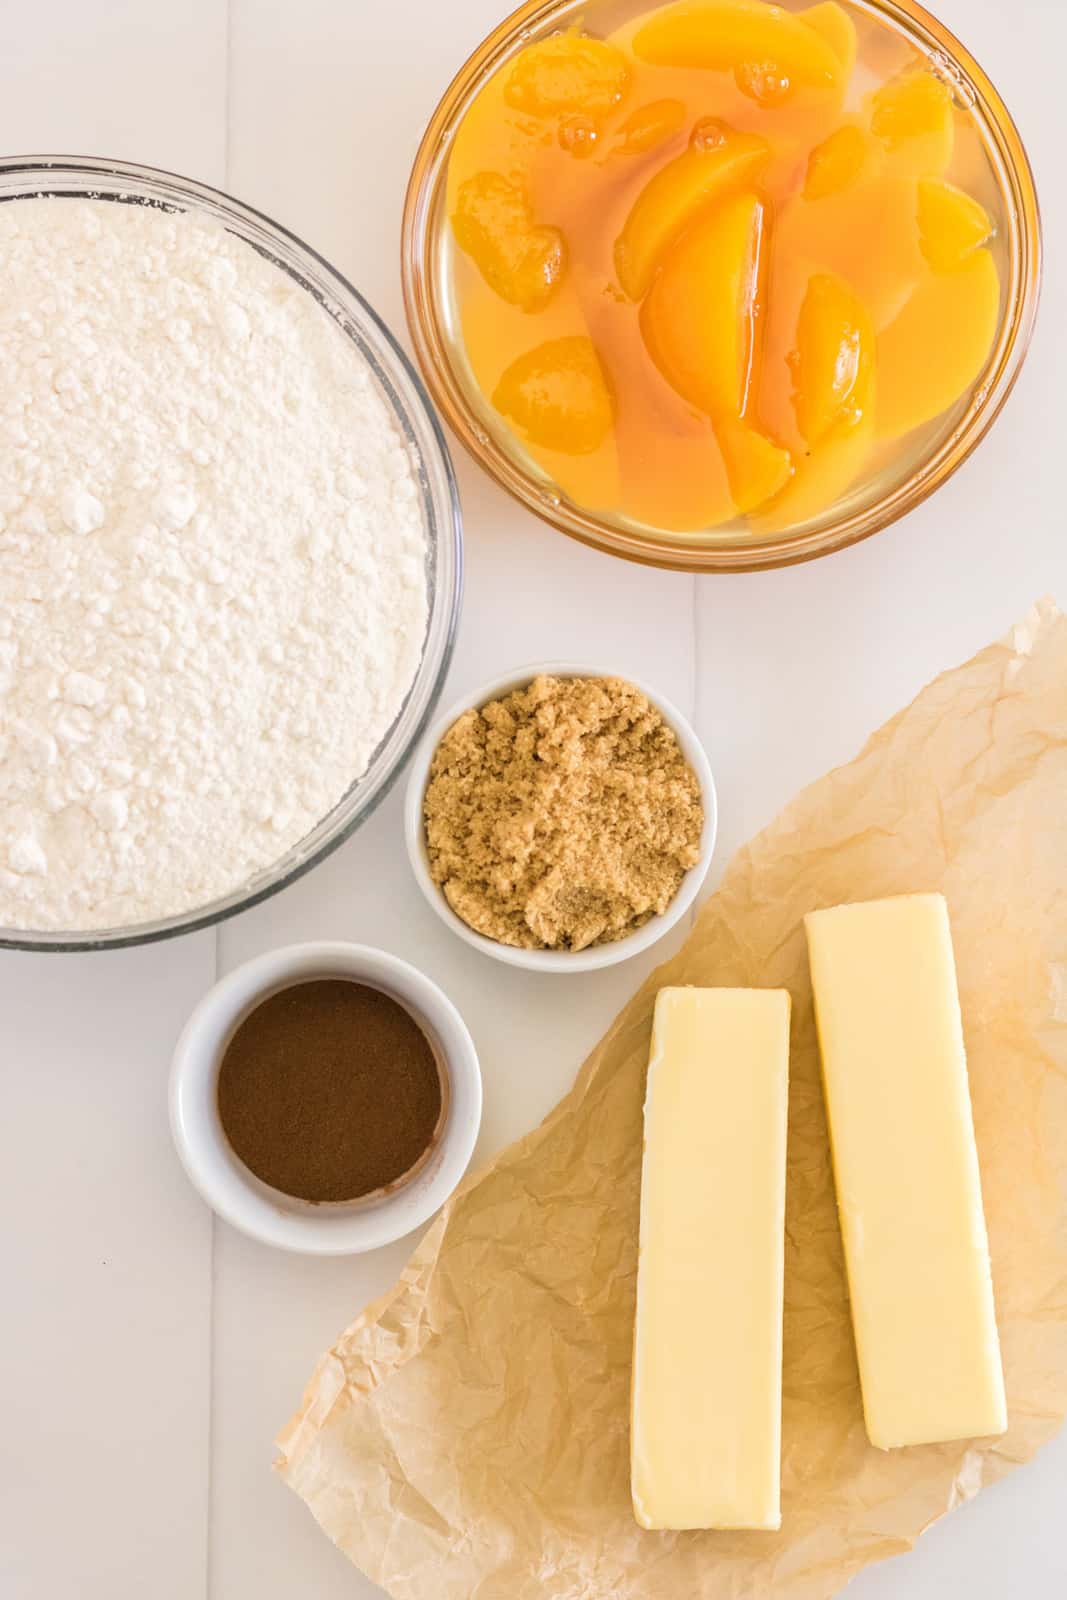 Ingredients needed to make Peach Dump Cake